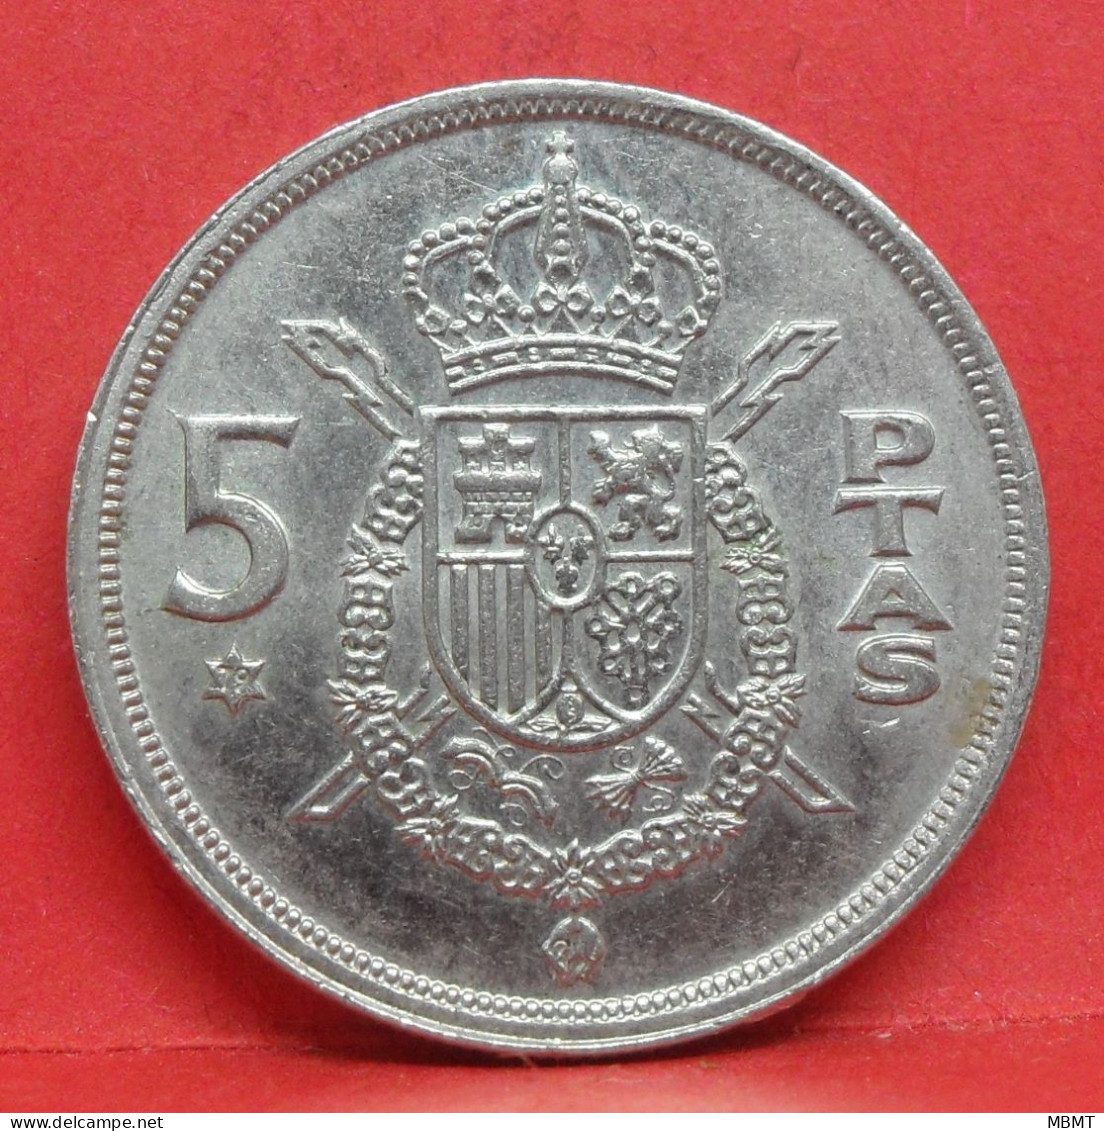 5 Pesetas 1975 étoile 79 - SUP - Pièce Monnaie Espagne - Article N°2375 - 5 Pesetas